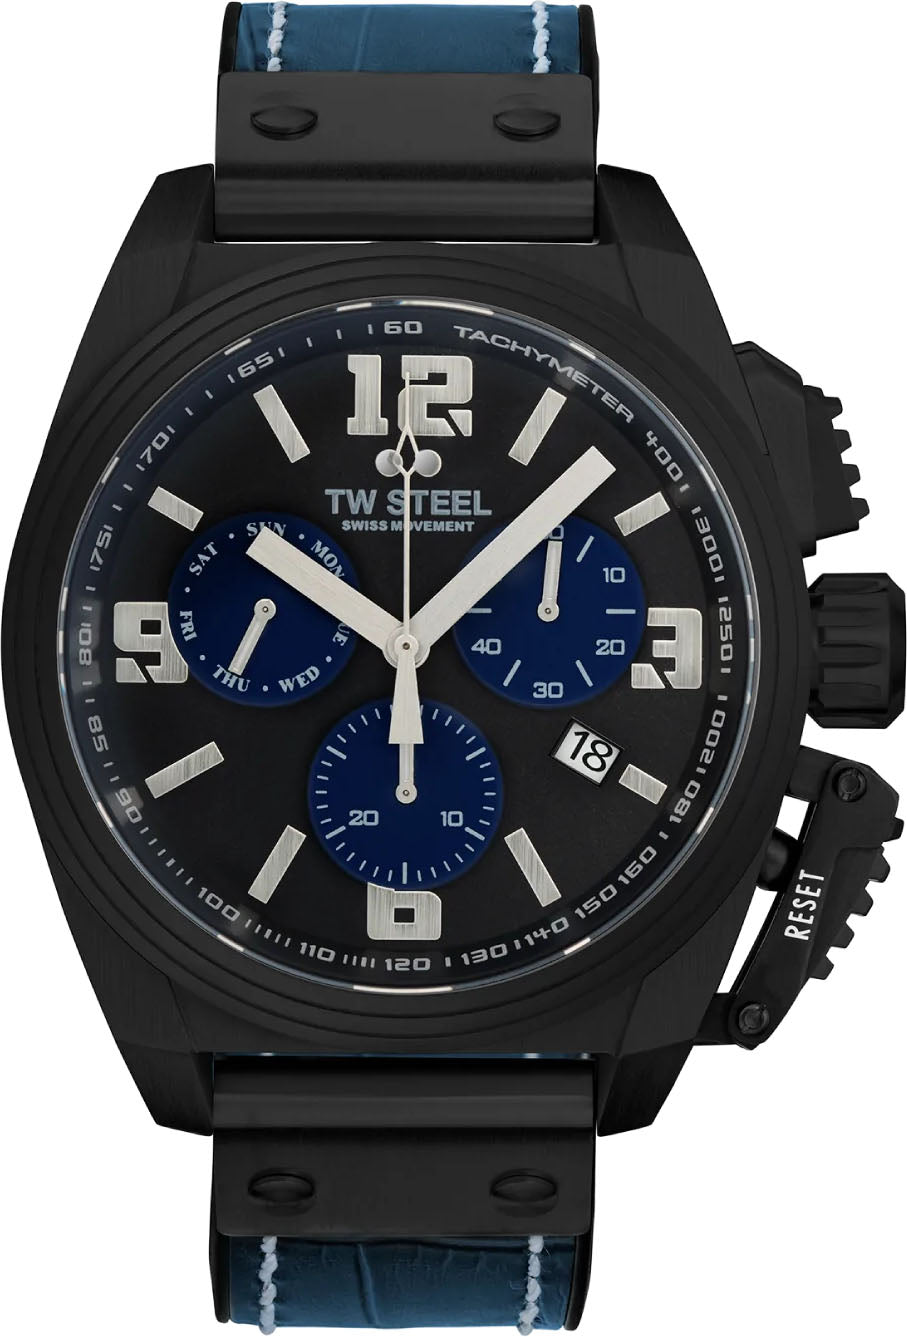 Photos - Wrist Watch TW Steel Watch Swiss Canteen - Black TW-708 